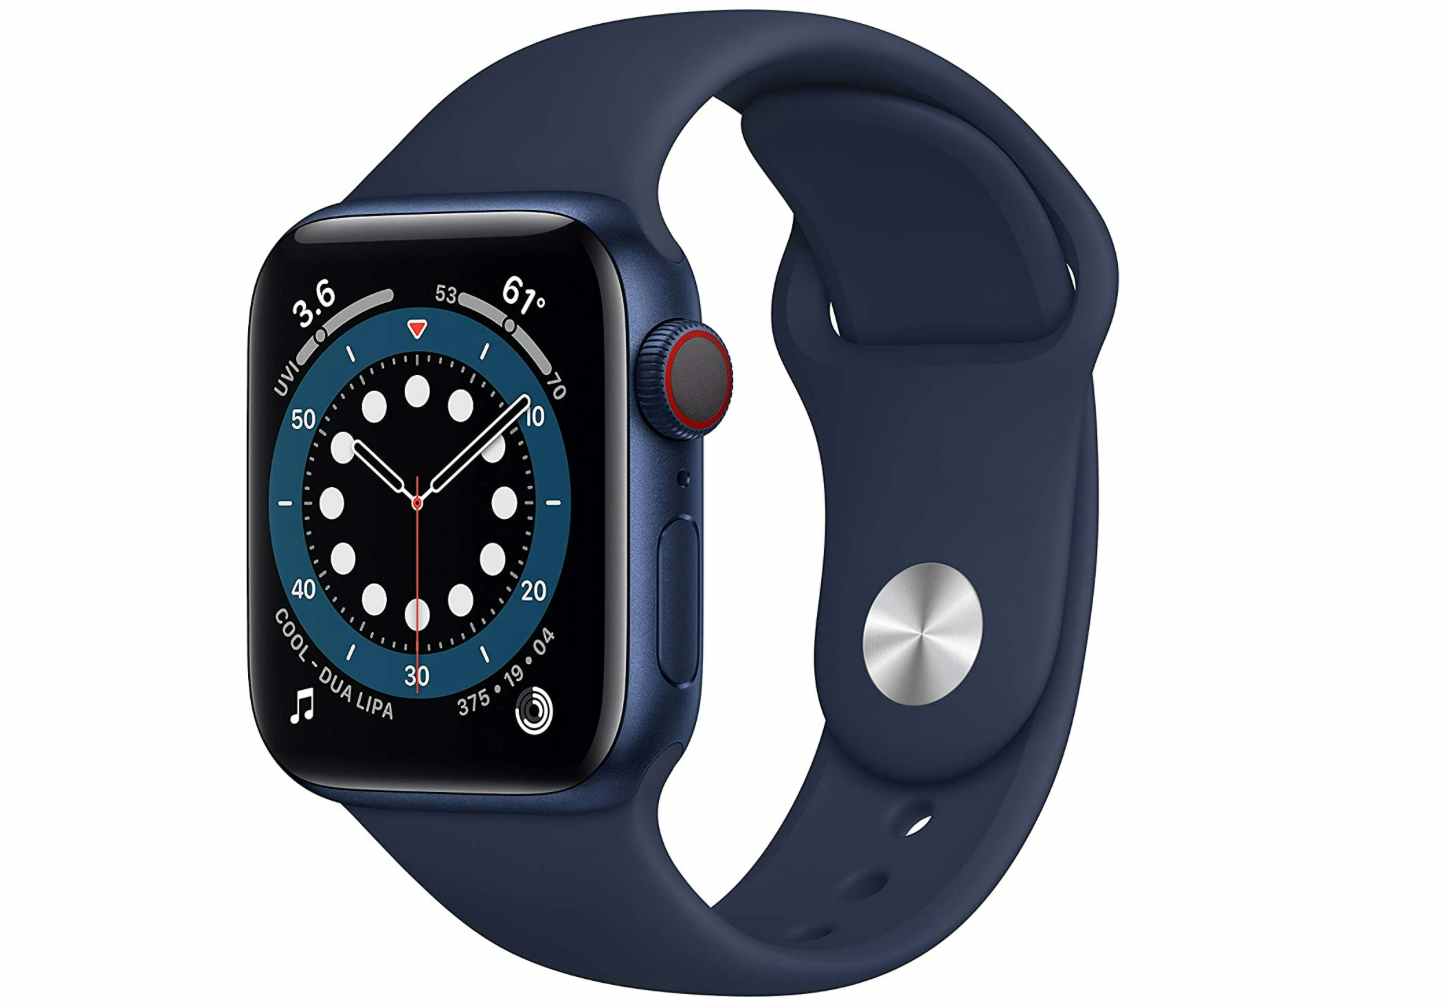 New Apple Watch Series 6 